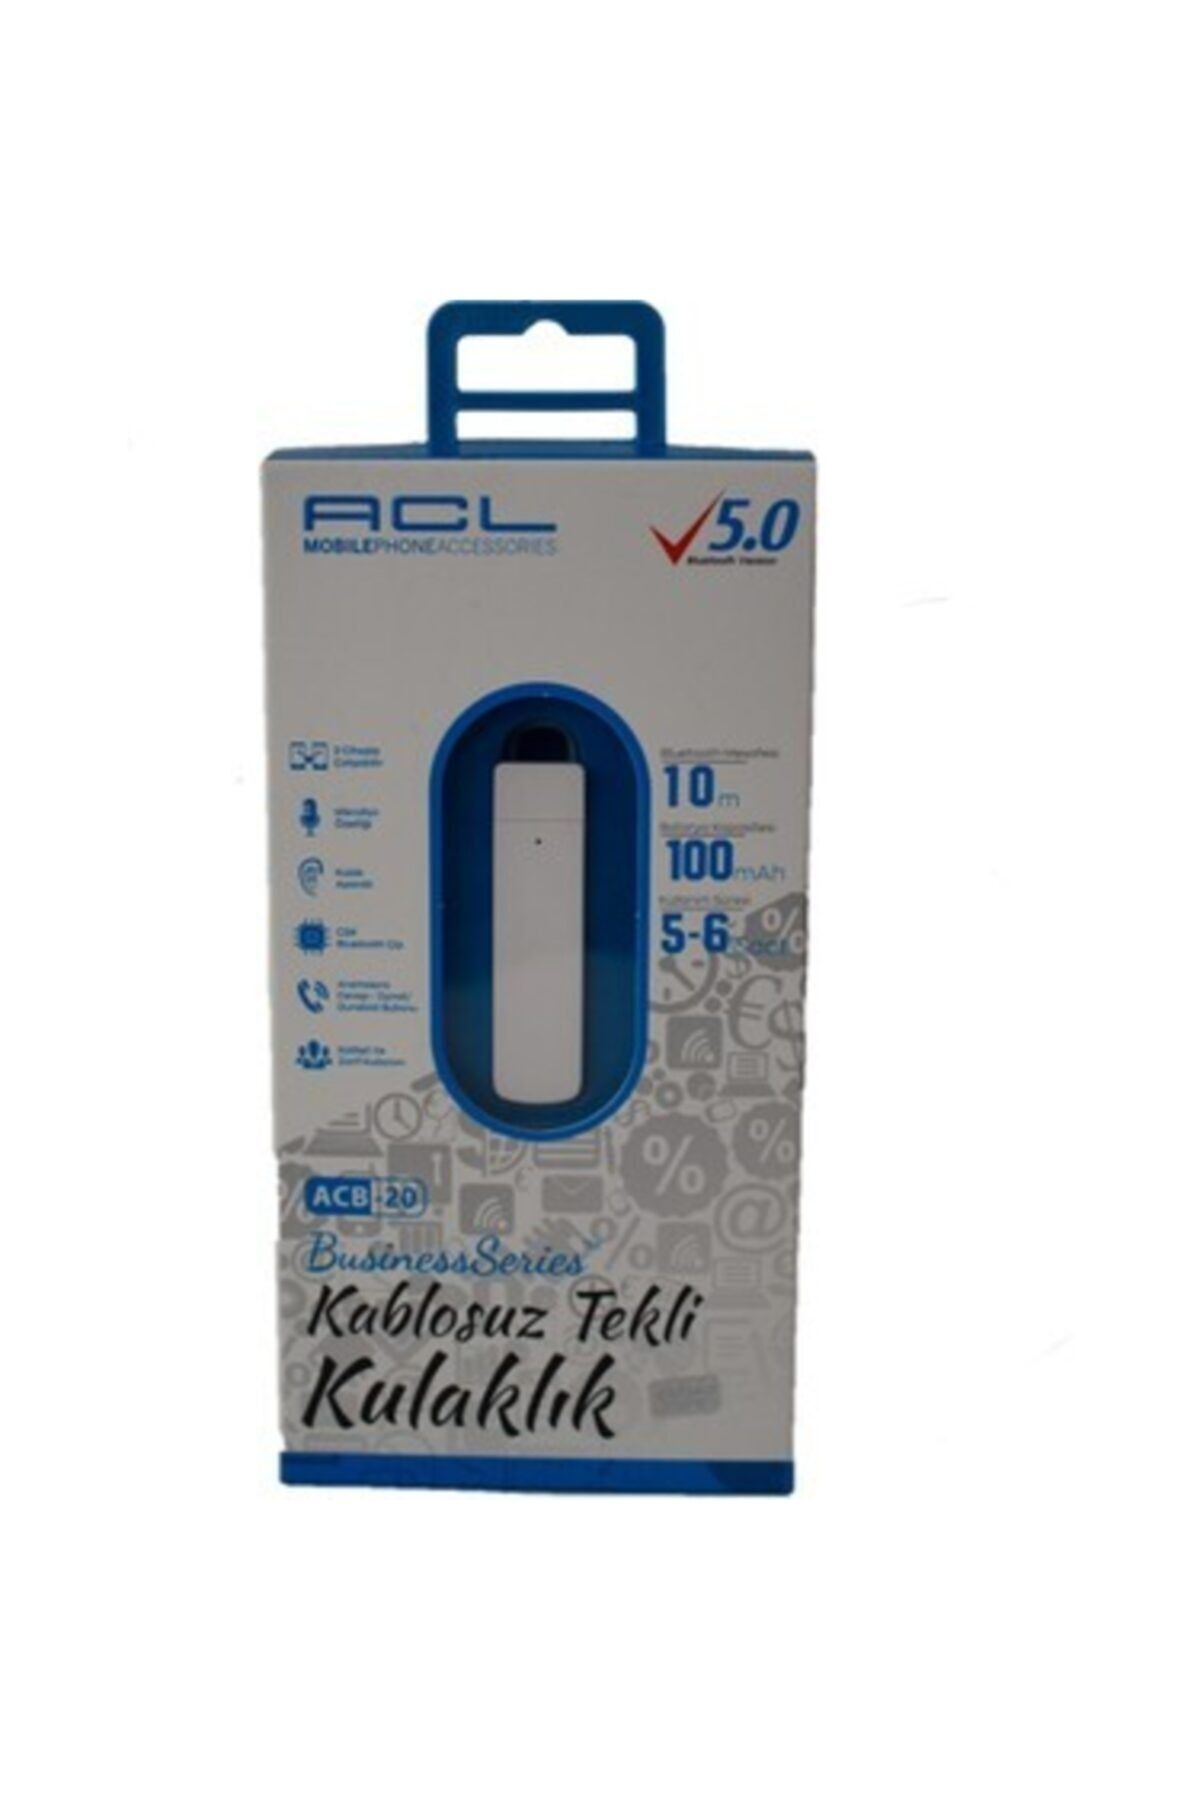 ACL Acb-20 Business Series Kablosuz Tekli Kulaklık